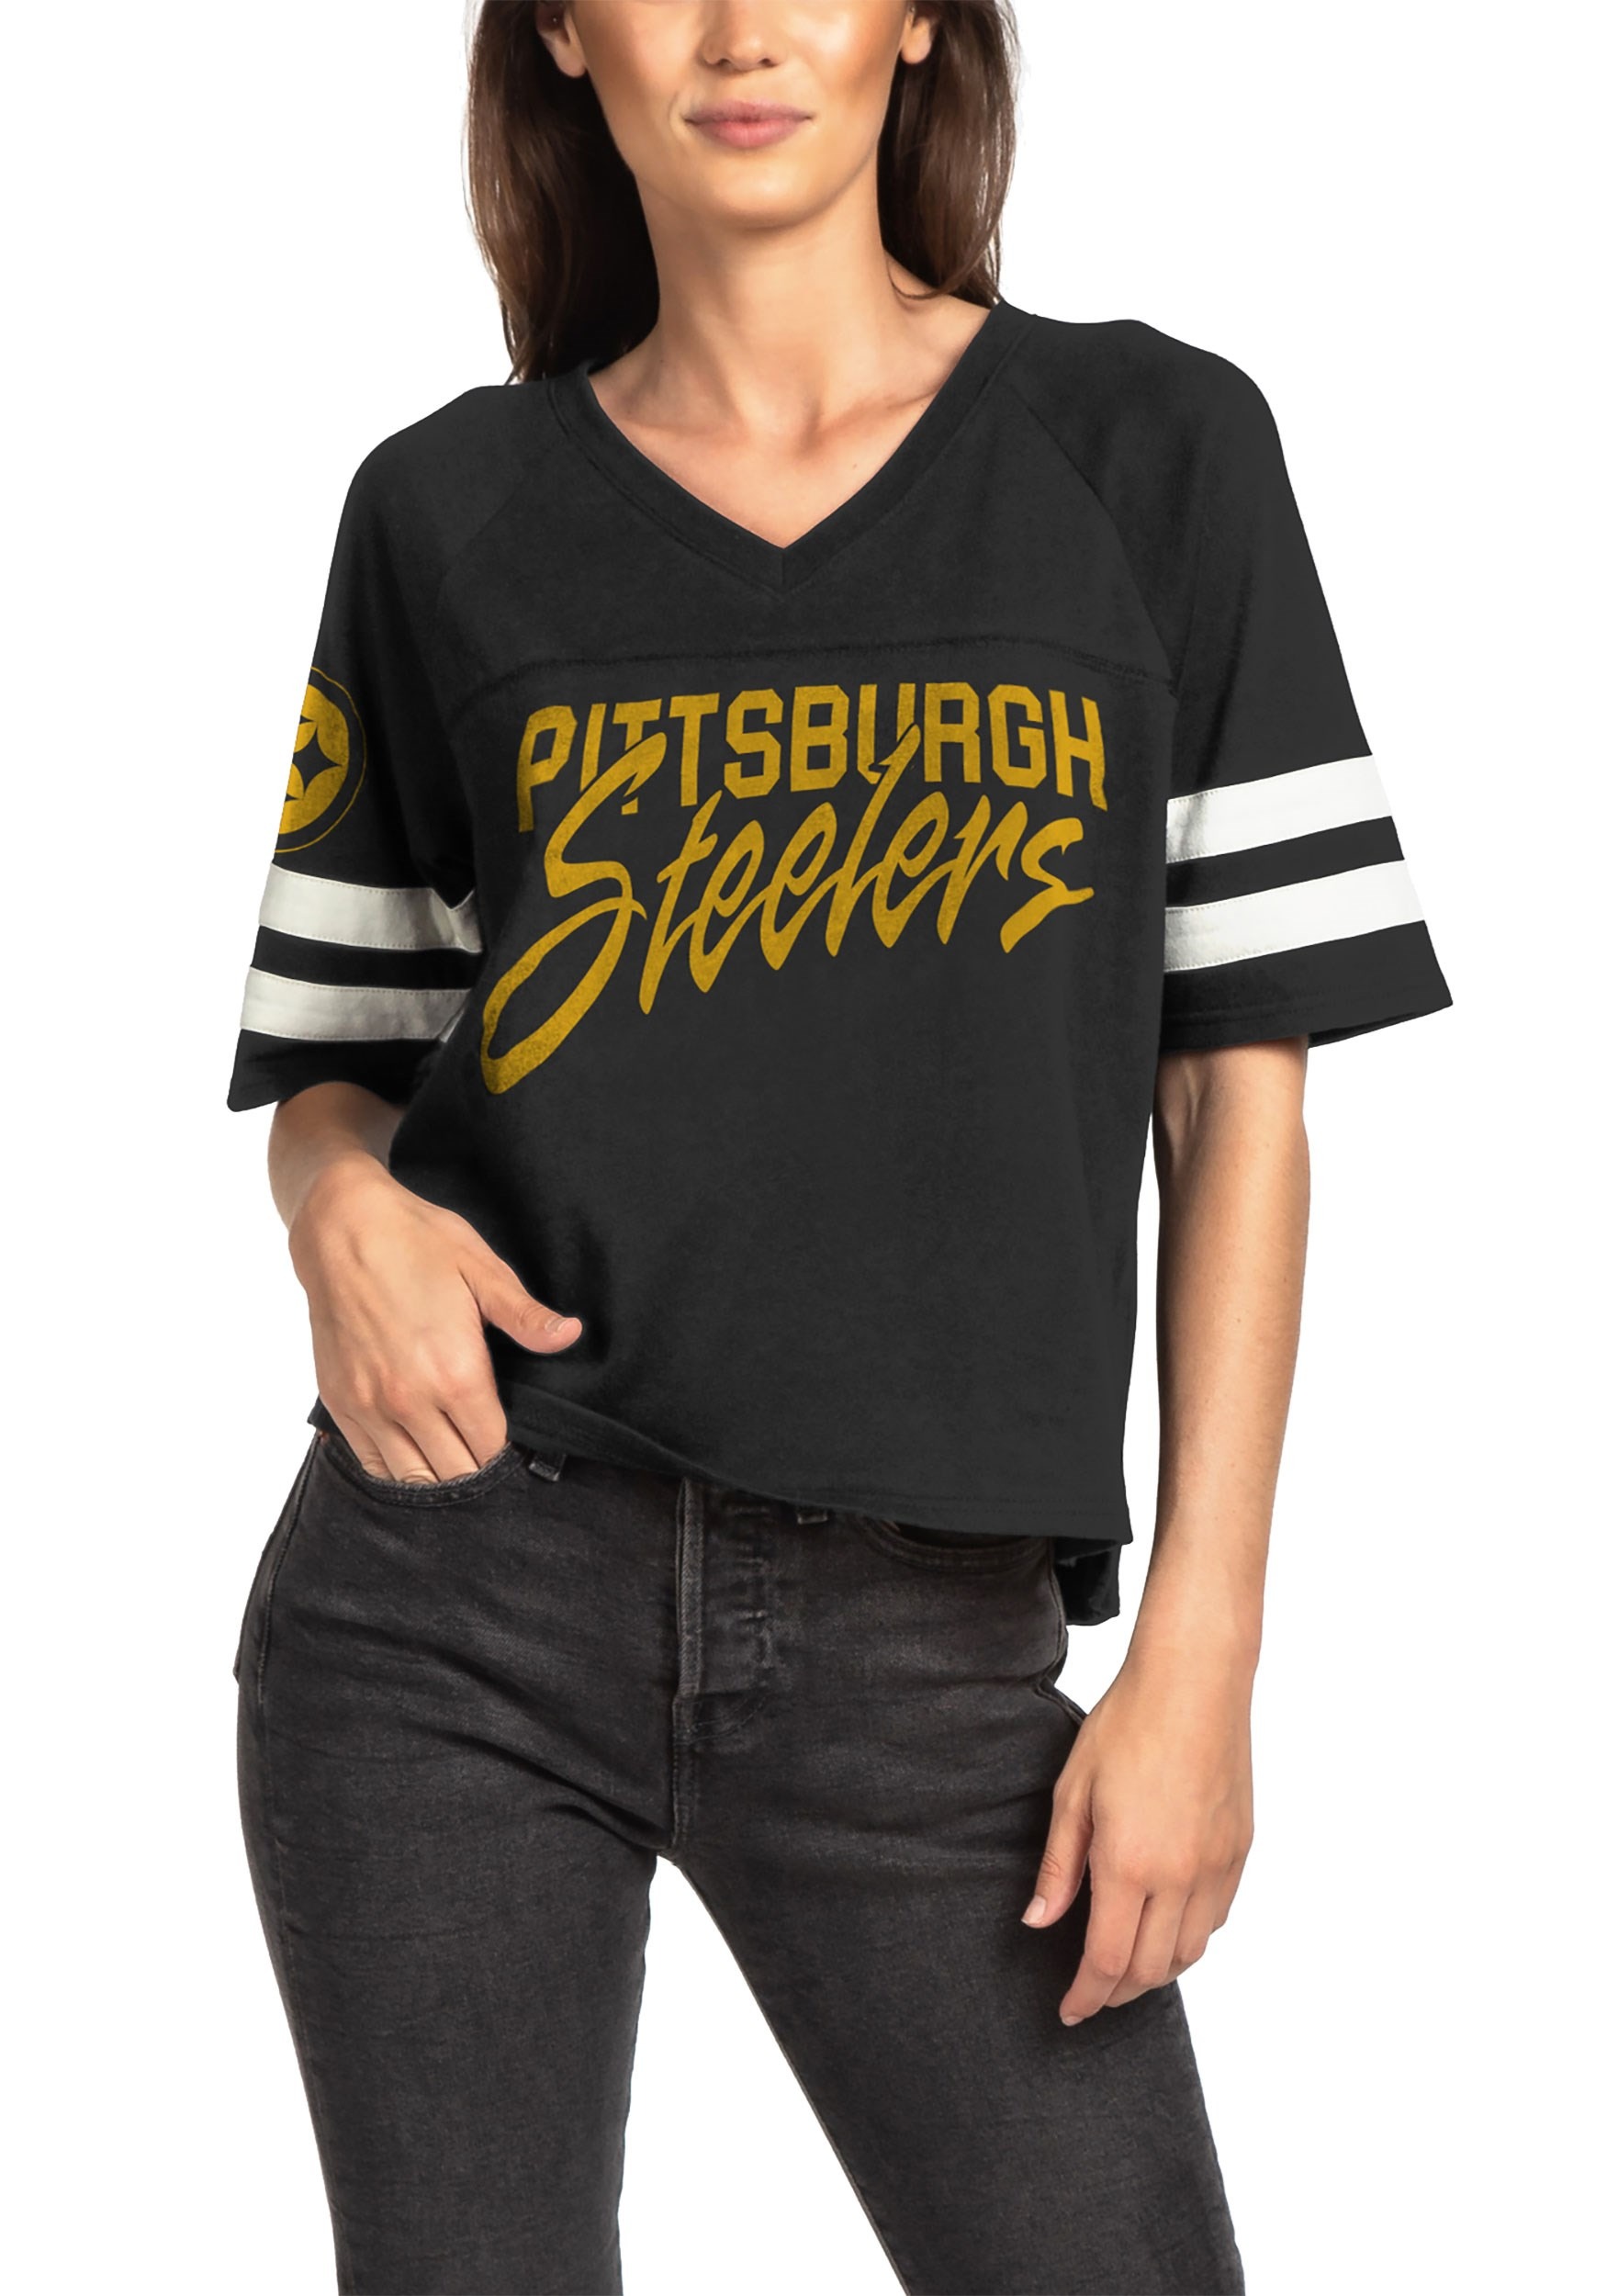 pittsburgh steelers womens shirts